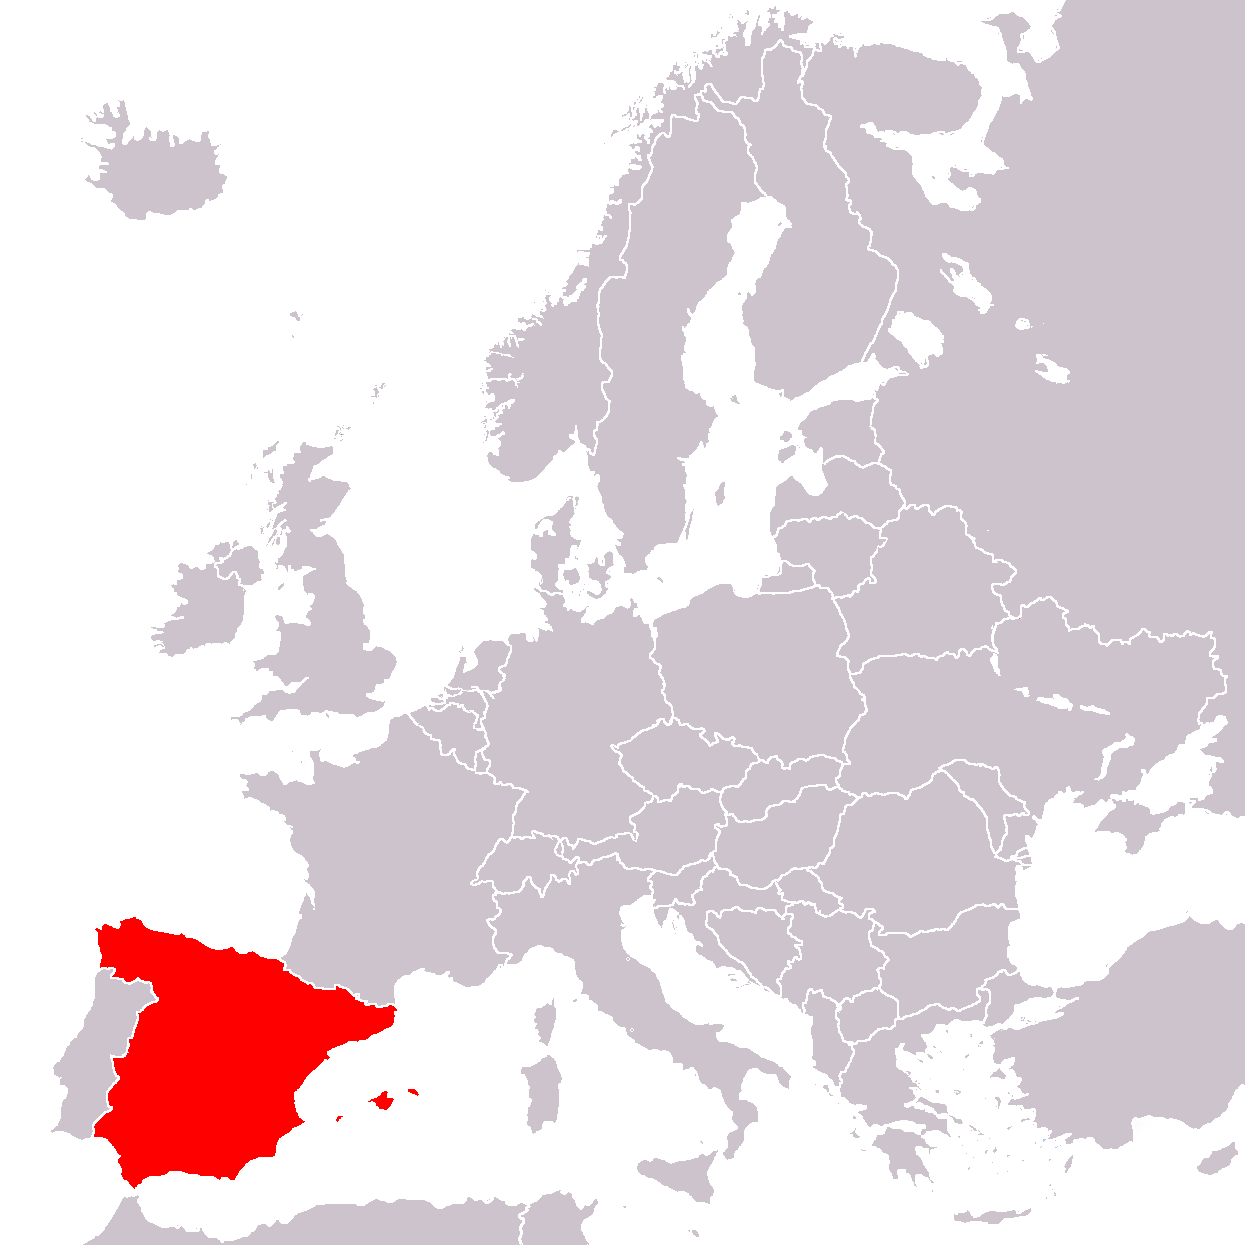 Spain in Europe map